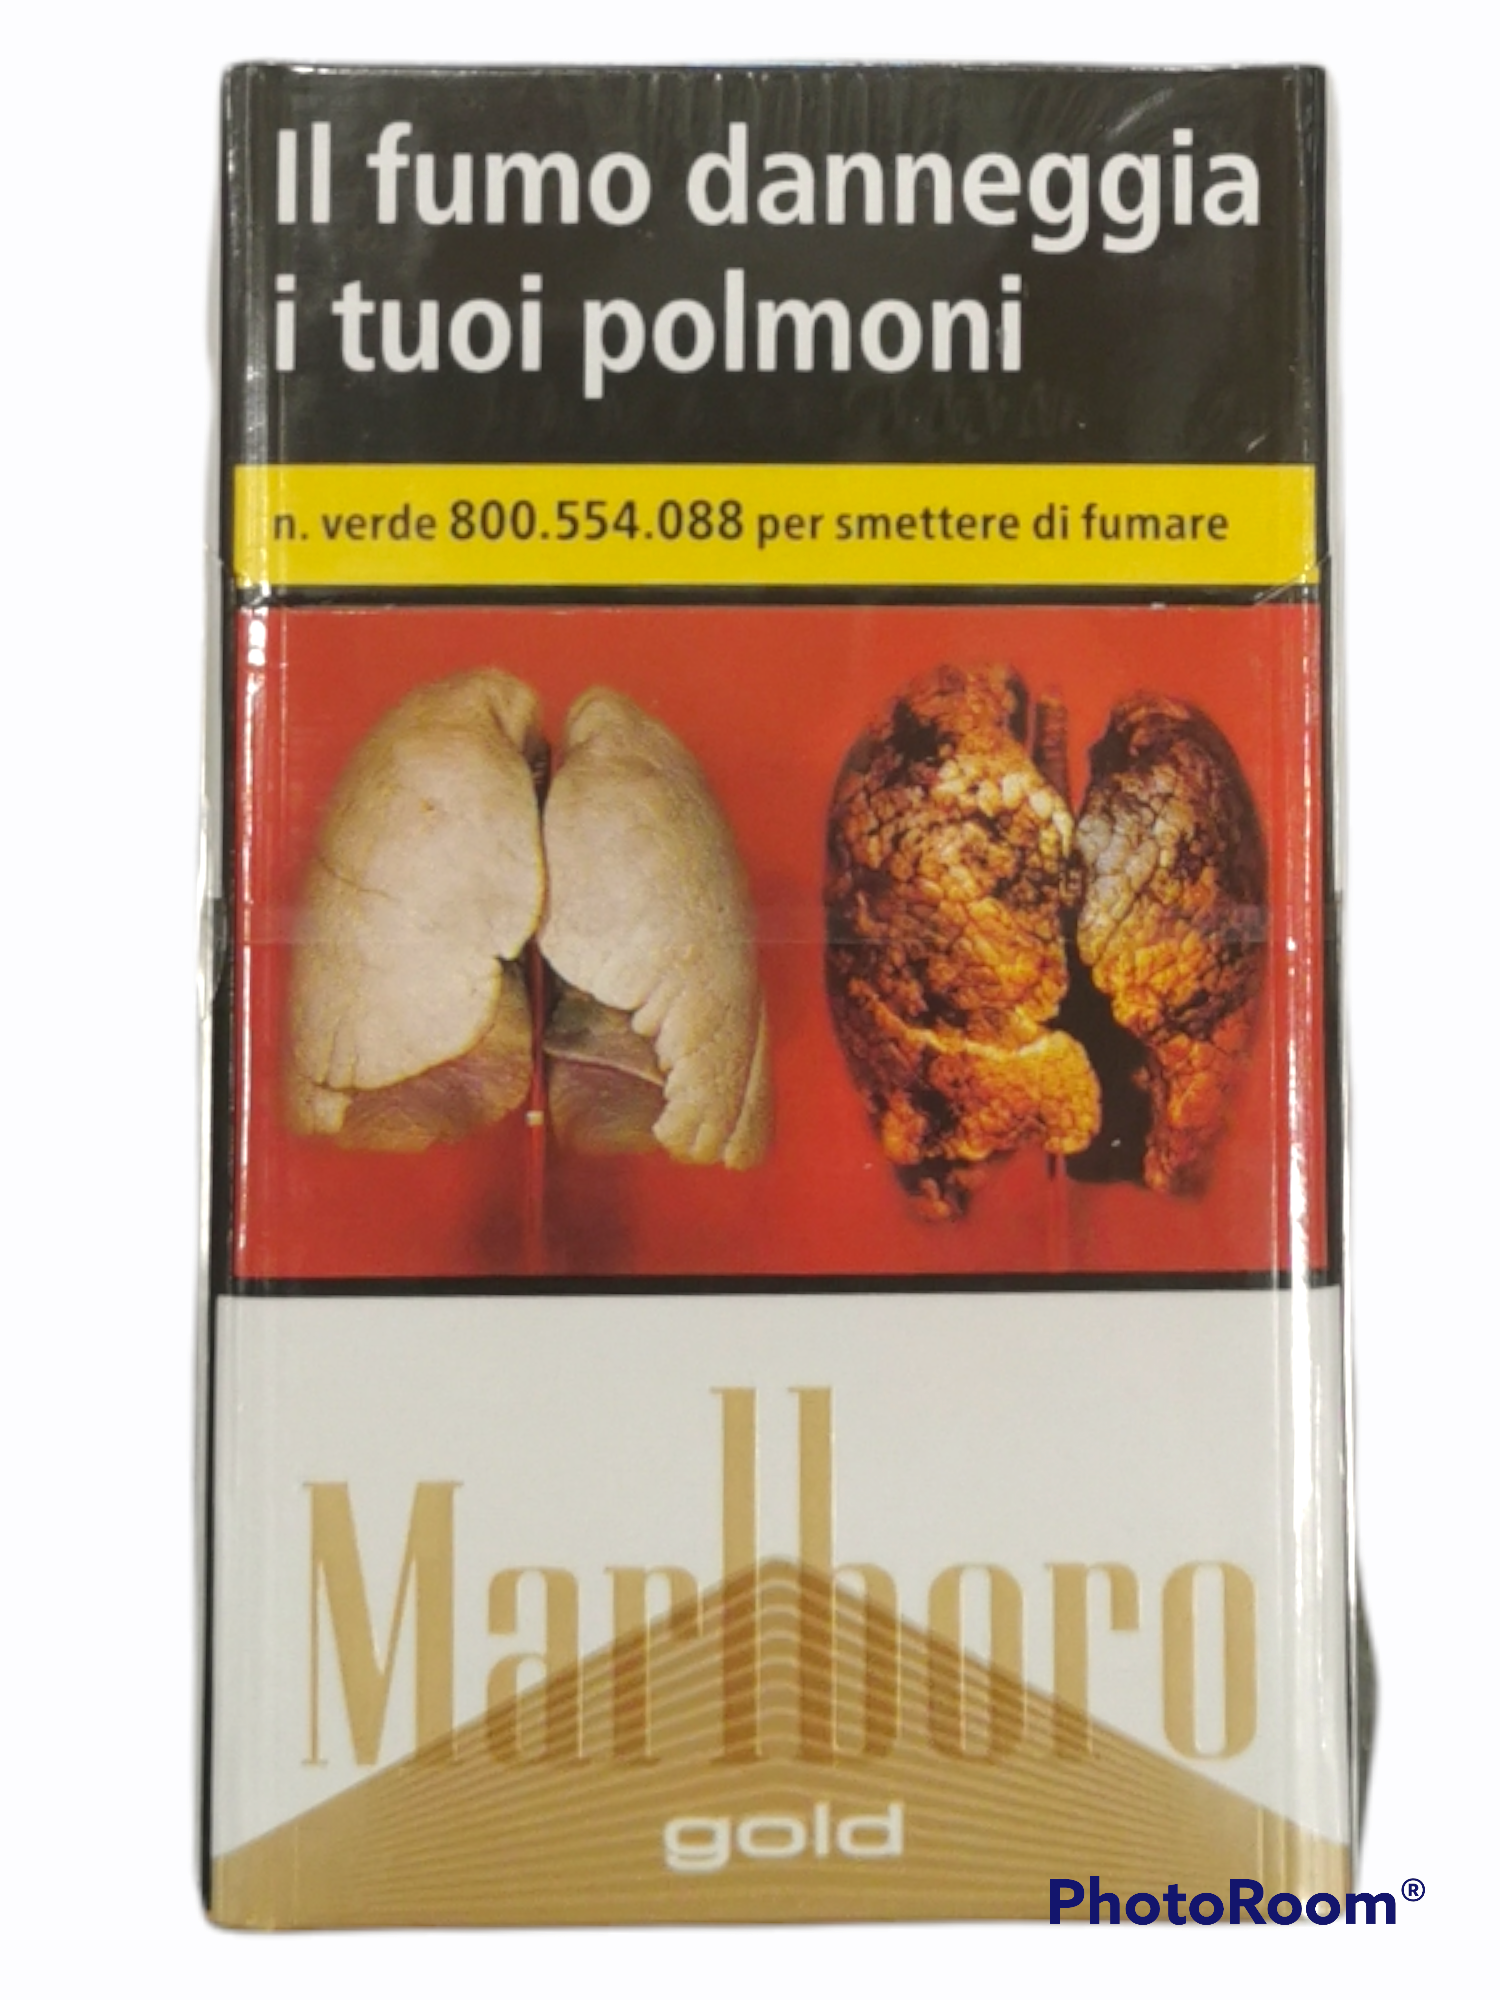 sigarette & tabacco